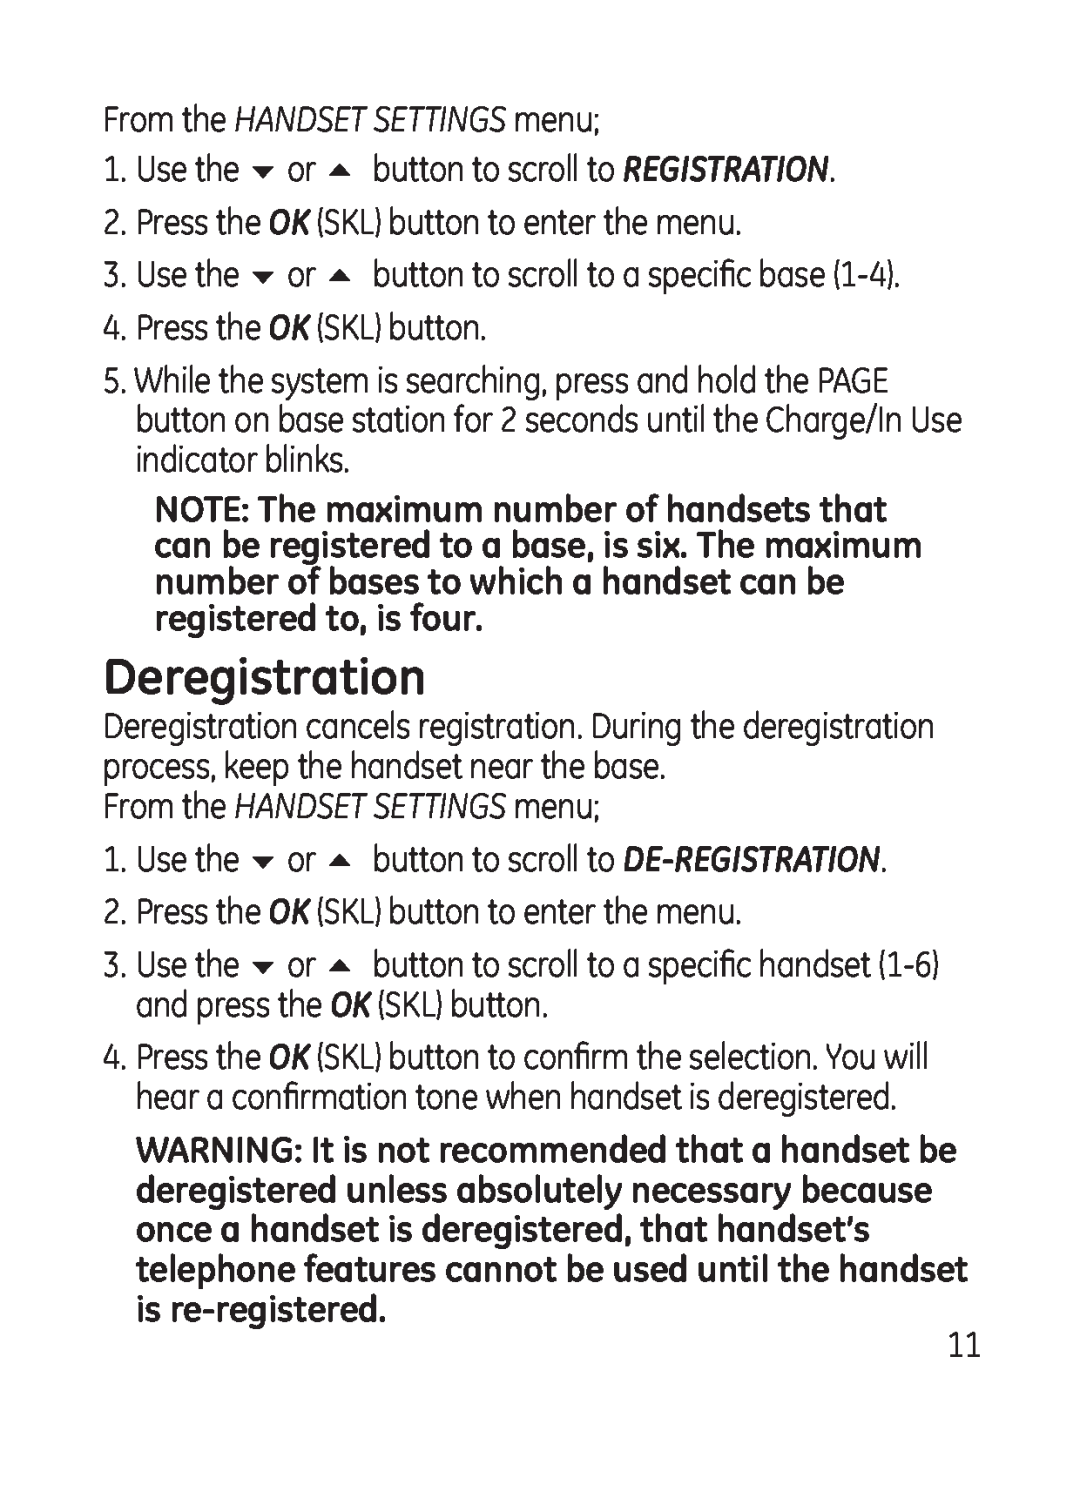 GE 28301 manual Deregistration, From the HANDSET SETTINGS menu 